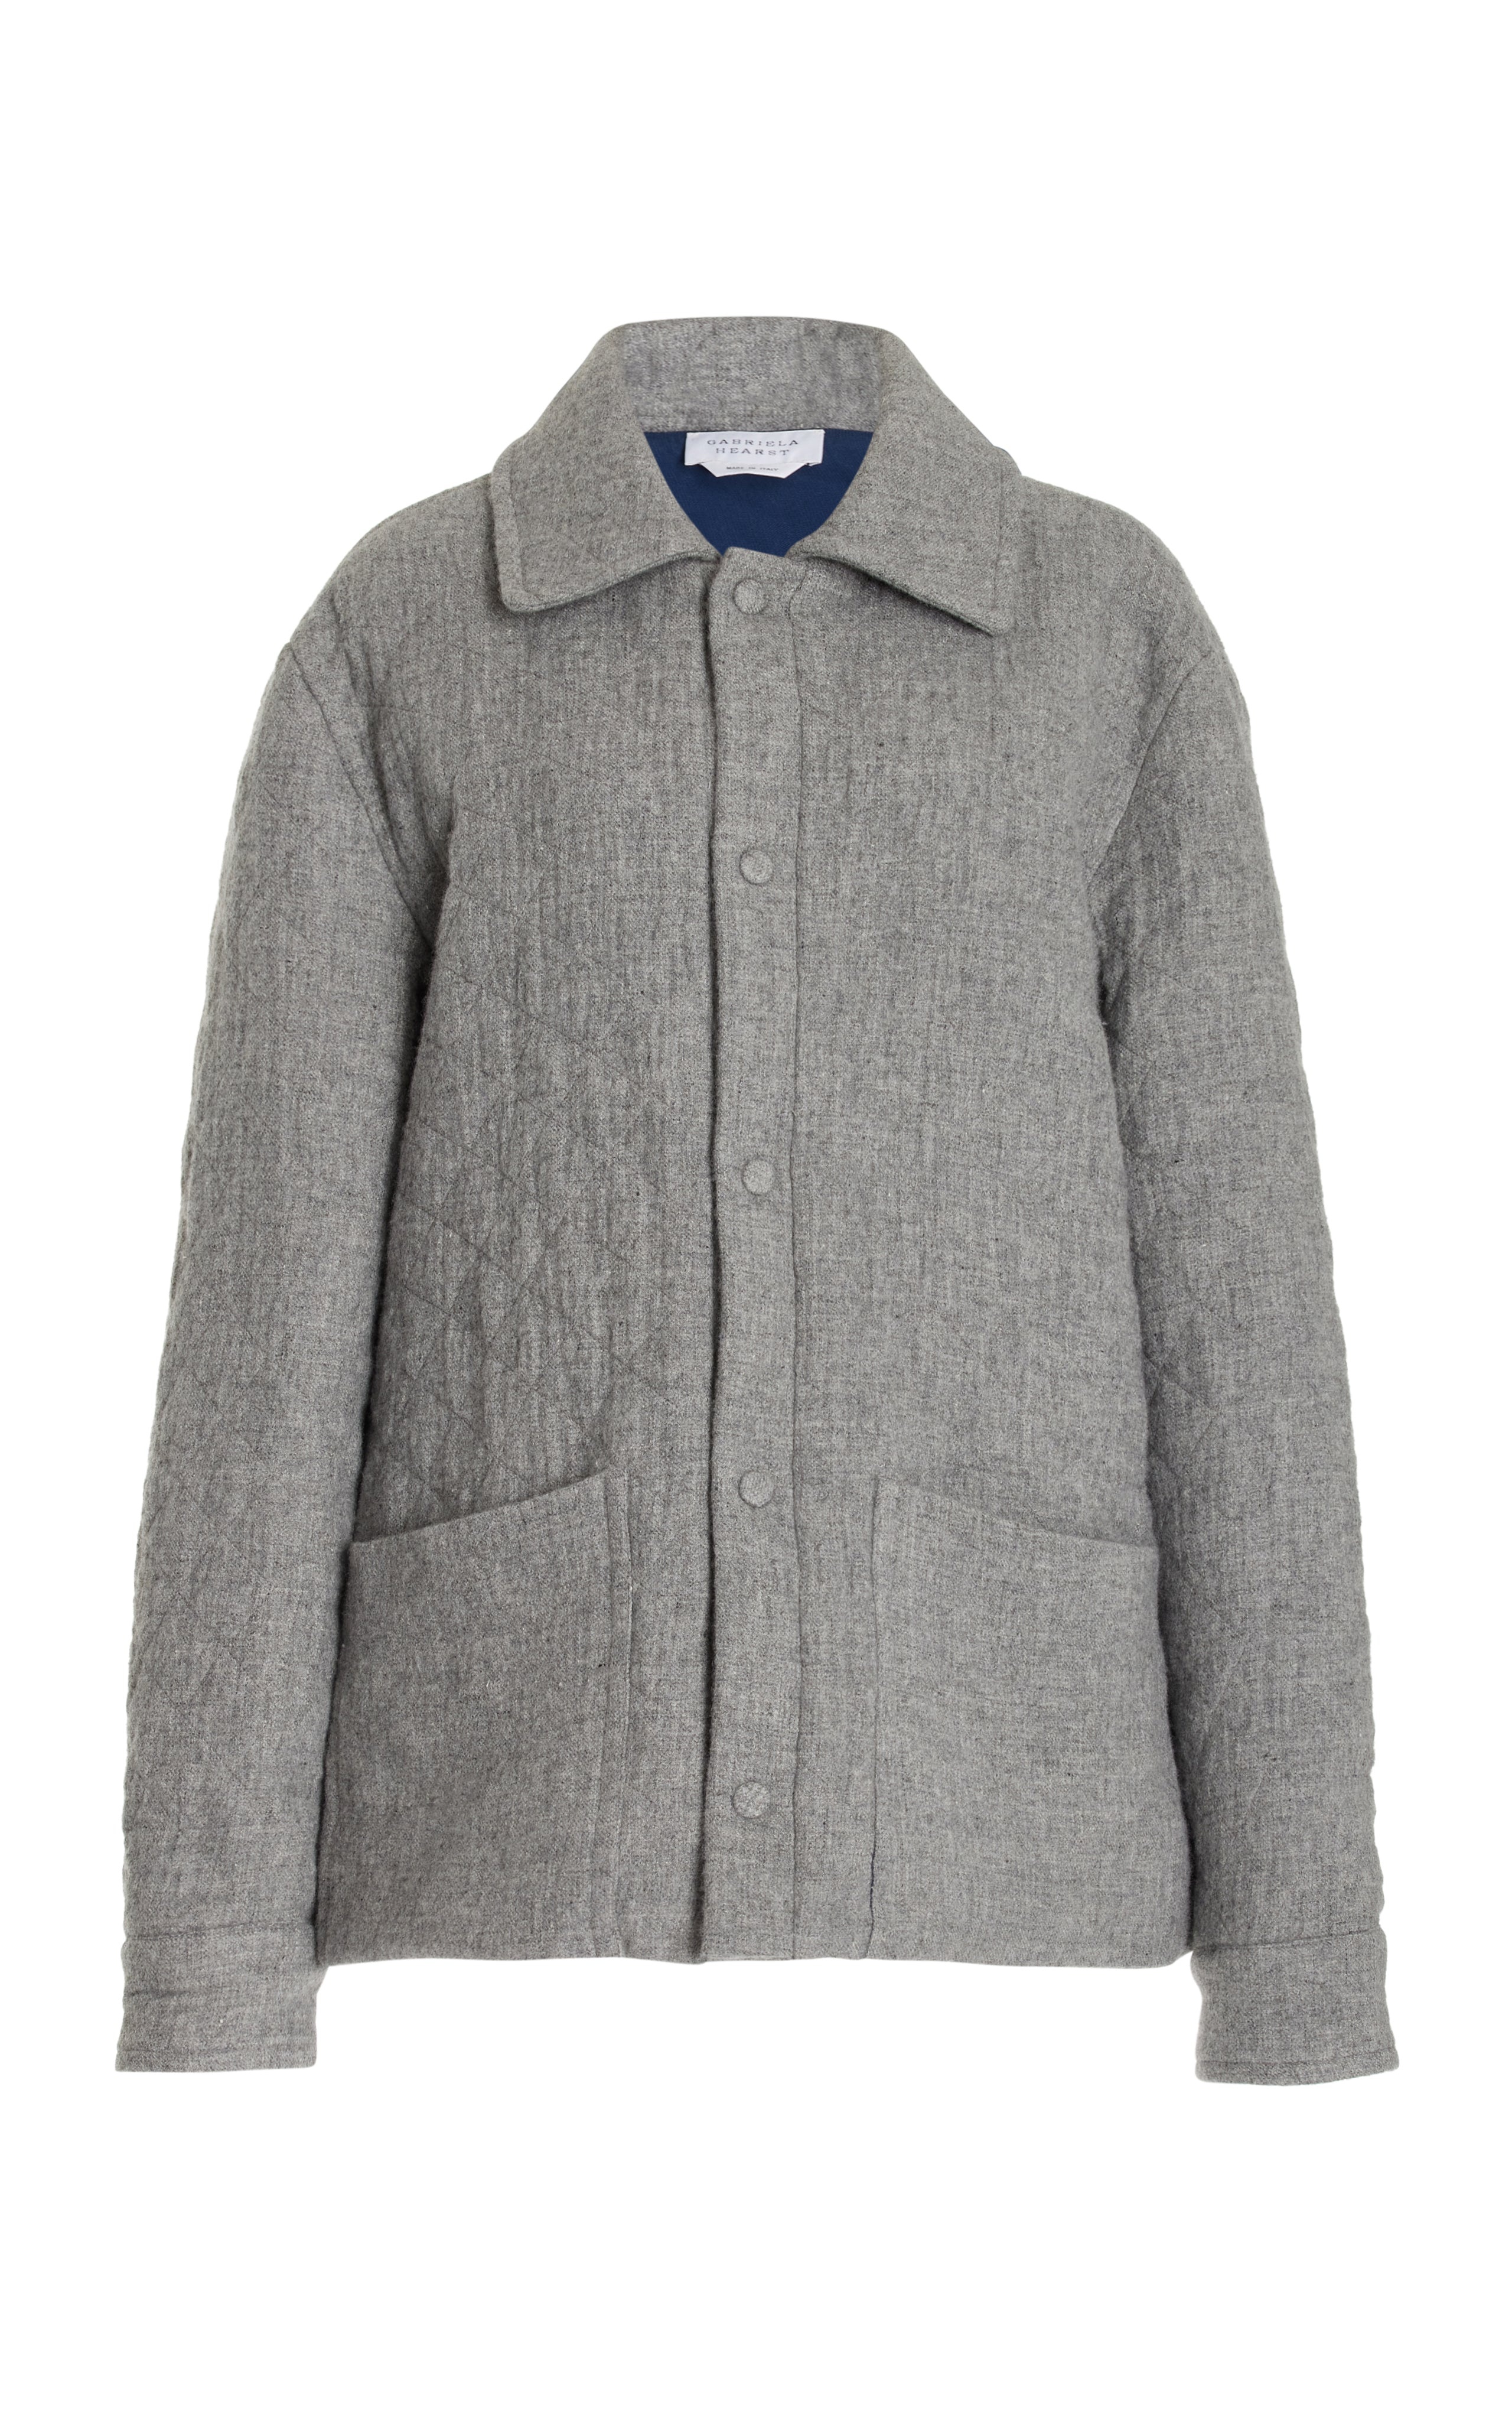 Skye Paddock Jacket in Grey Melange Cashmere Linen - 1